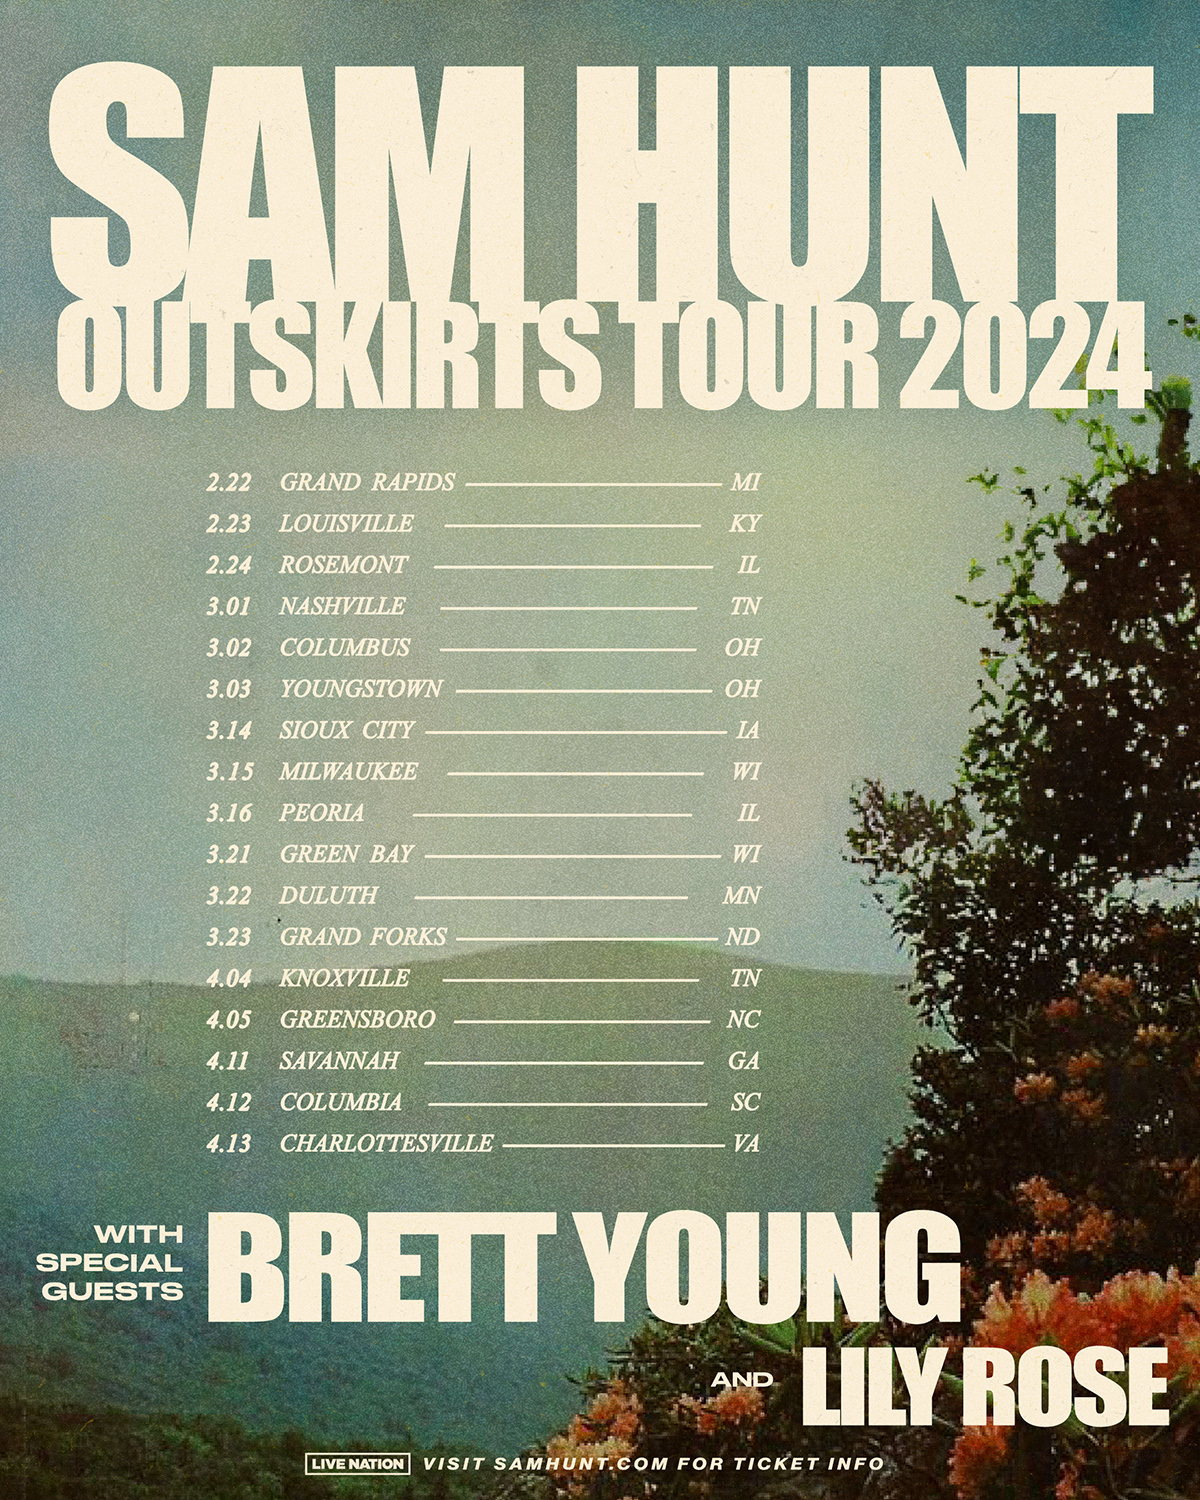 Sam Hunt The Outskirts Tour 2024